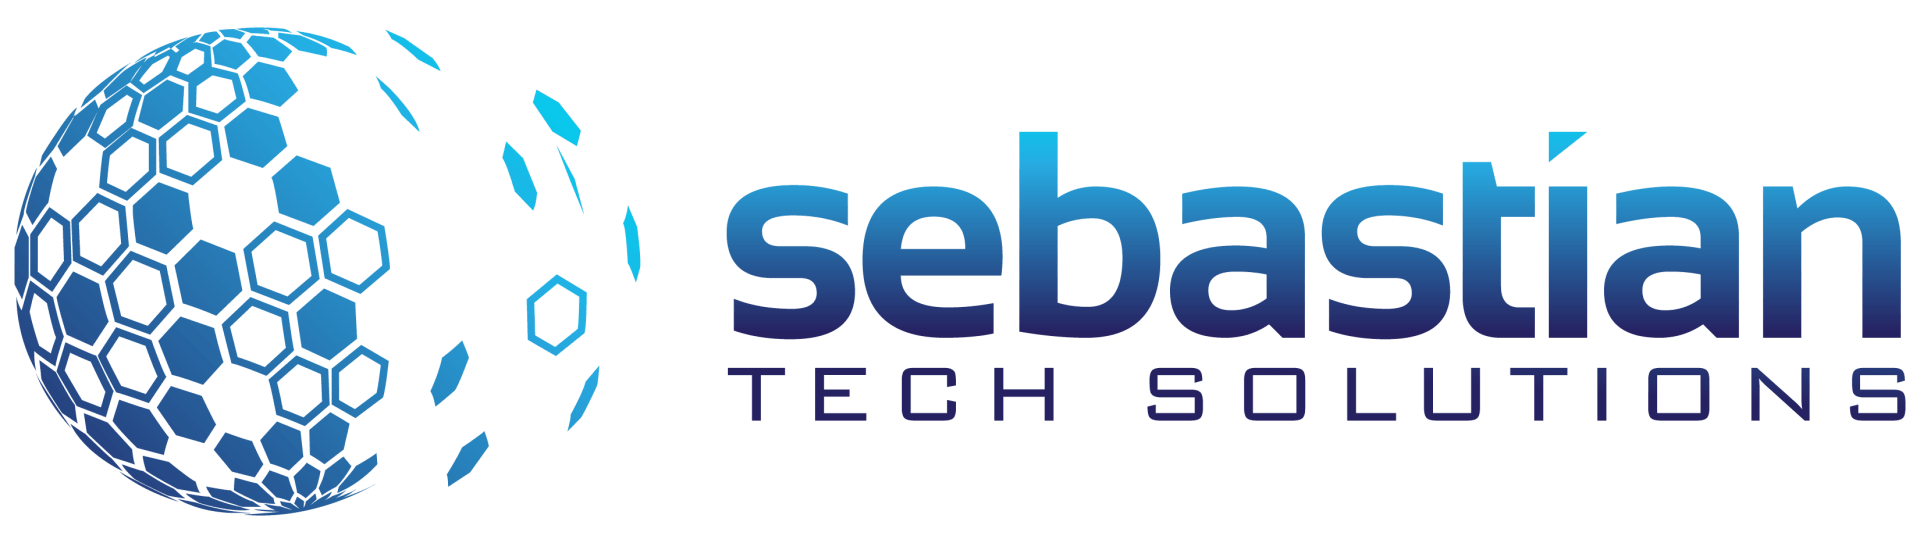 Sebastian tech solutions logo